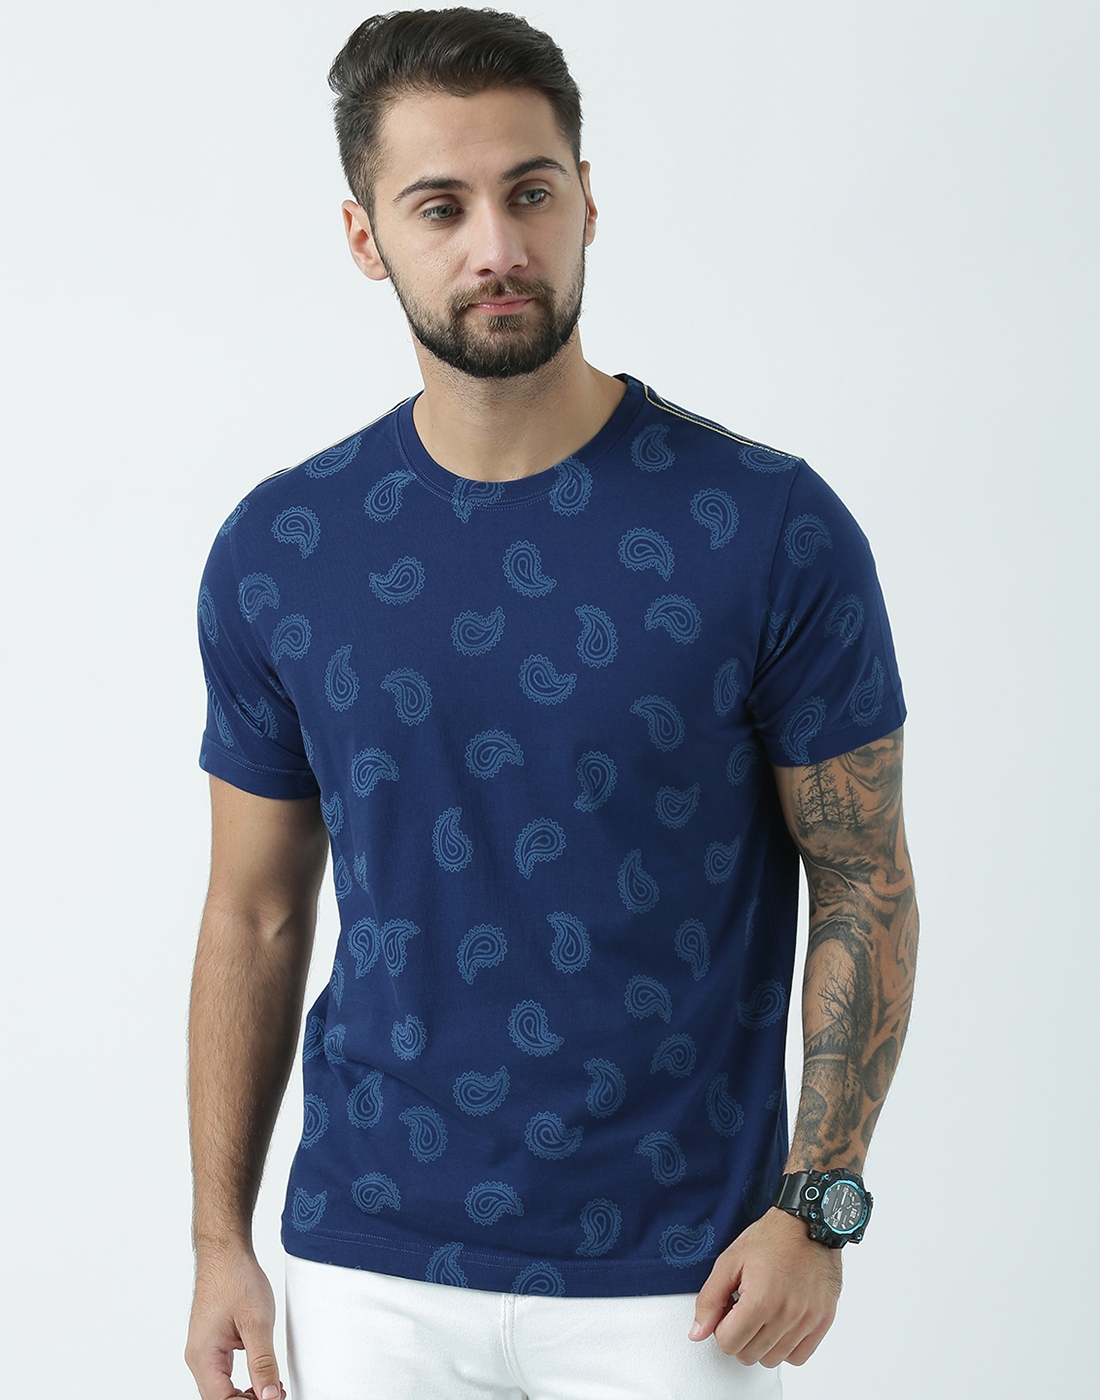 HUETRAP | Huetrap Men's Graphic Round Neck Short Sleeve Launch Navy T-Shirt